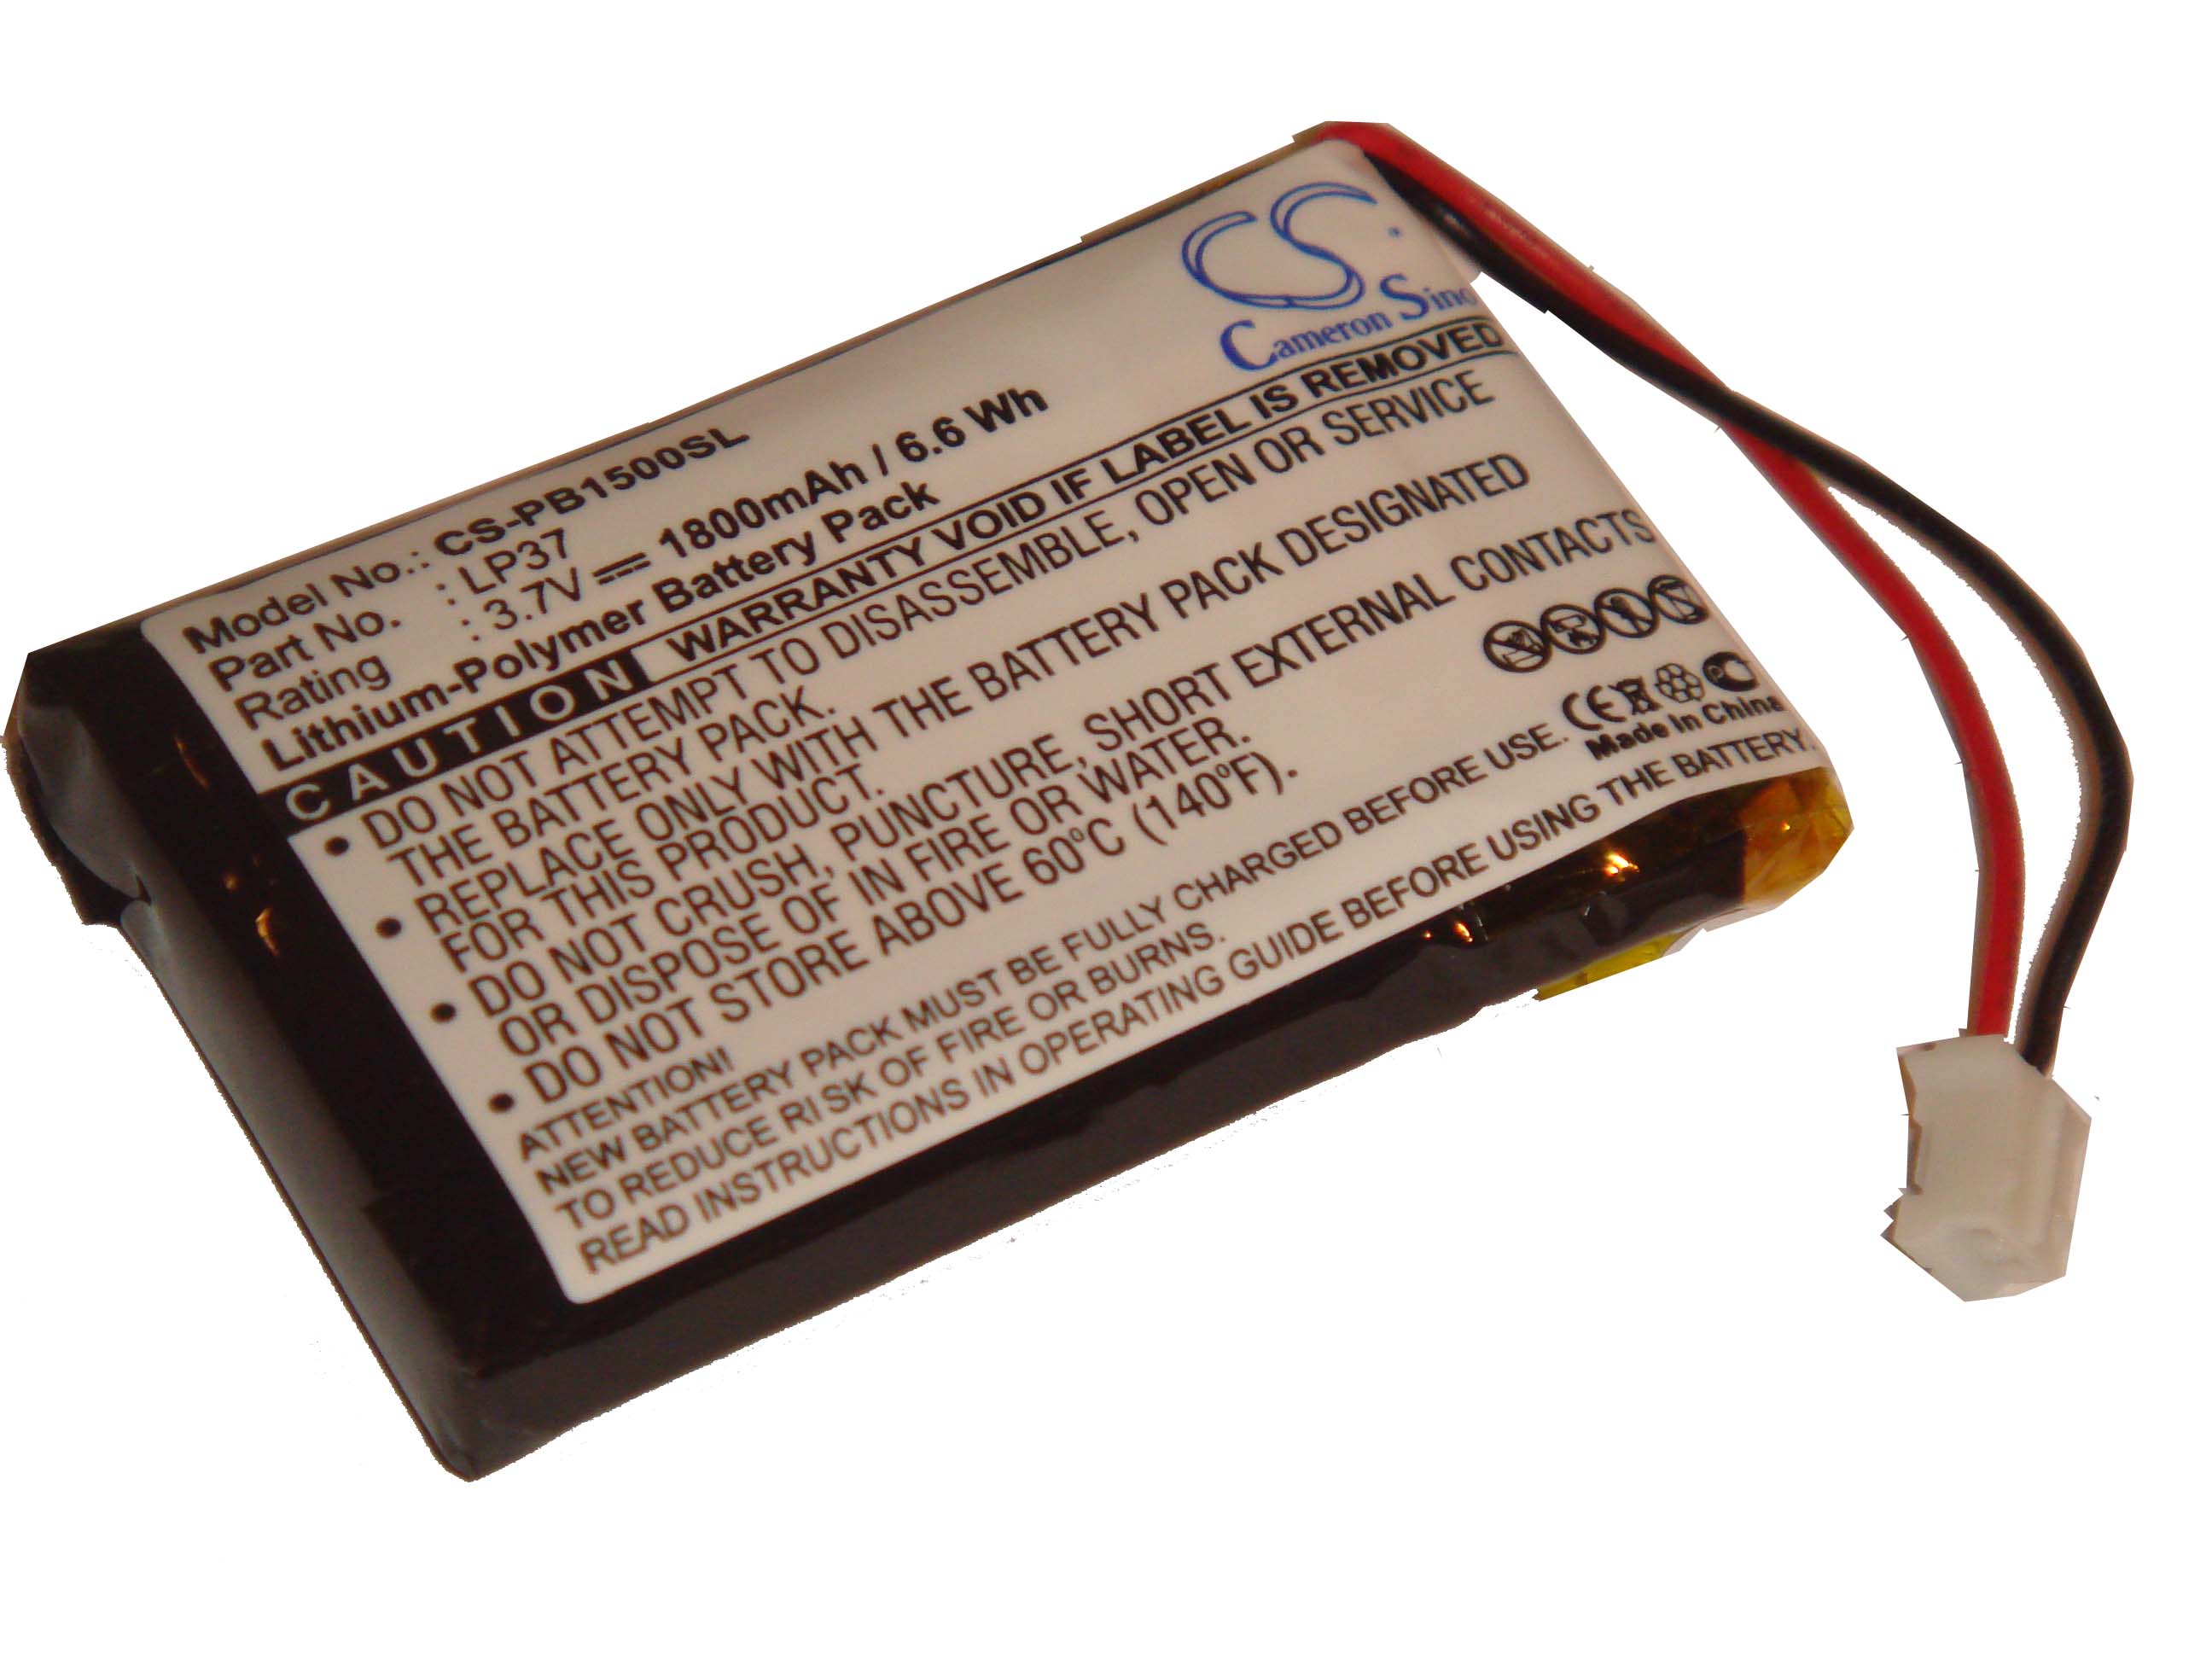 DAB Radio Battery Replacement for LP37 - 1800mAh 3.7V Li-polymer